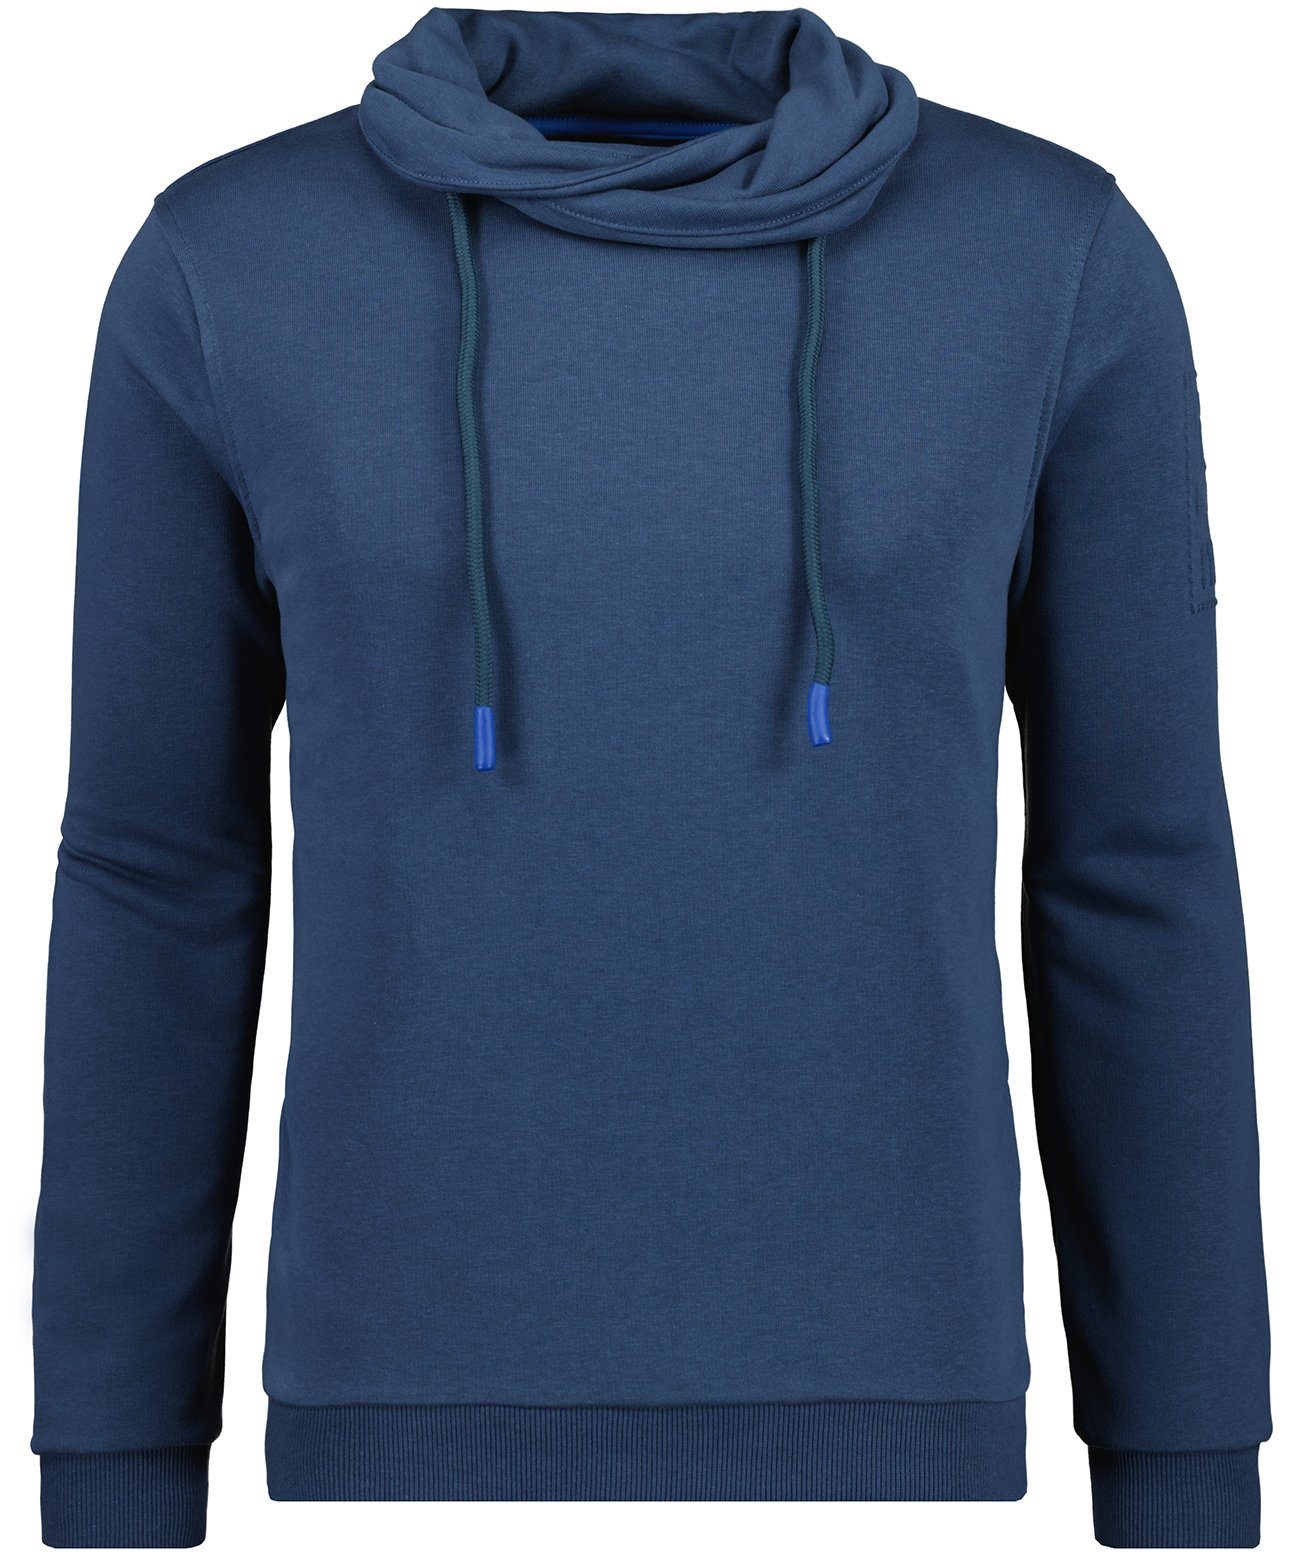 RAGMAN Sweatshirt Nachtblau